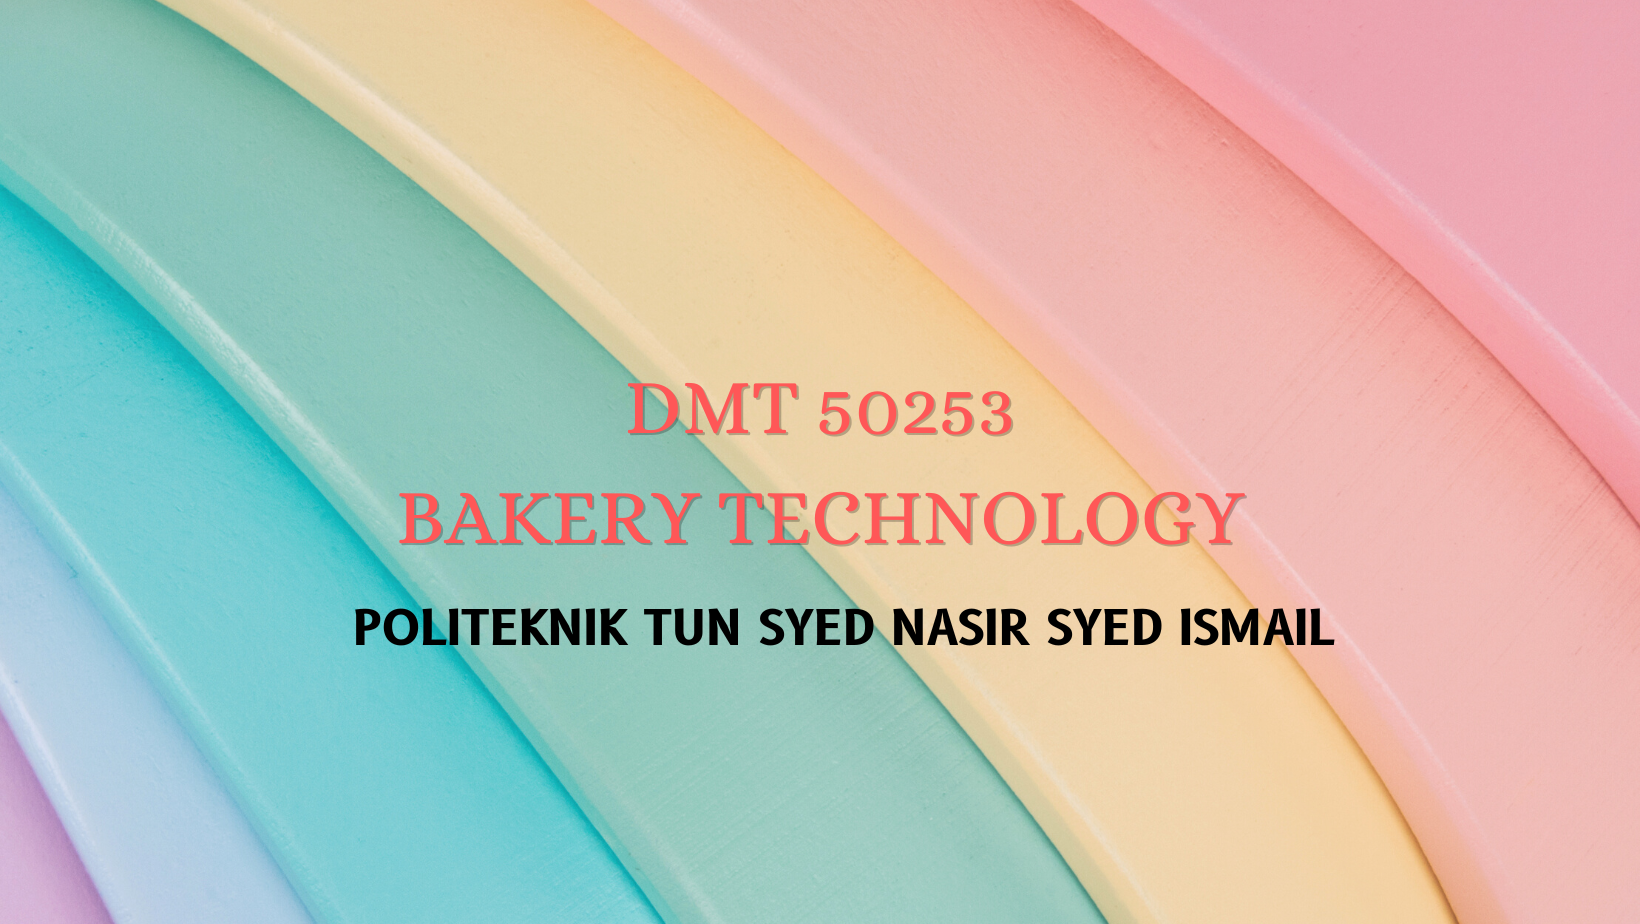 DMT50253 Bakery technology